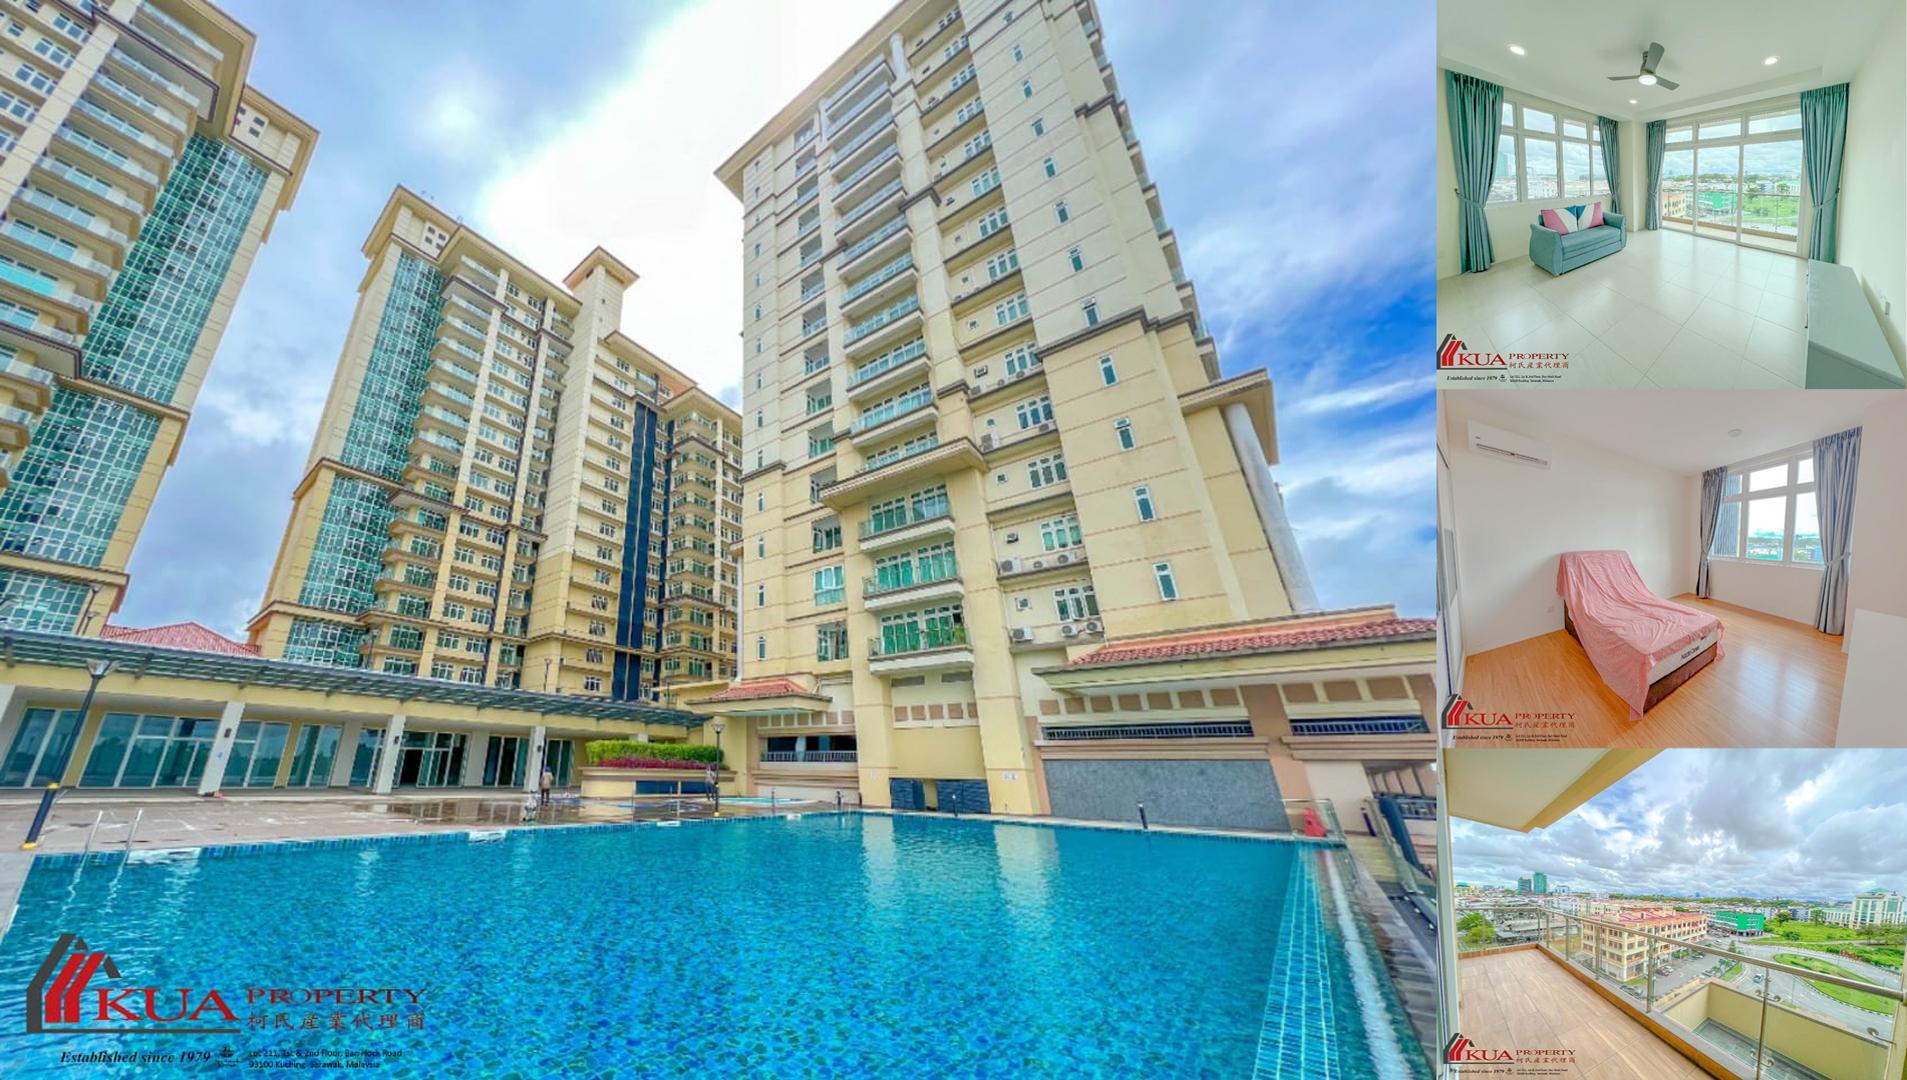 Riverine diamond Condominium (Block B) FOR SALE! Located at Petanak, Kuching